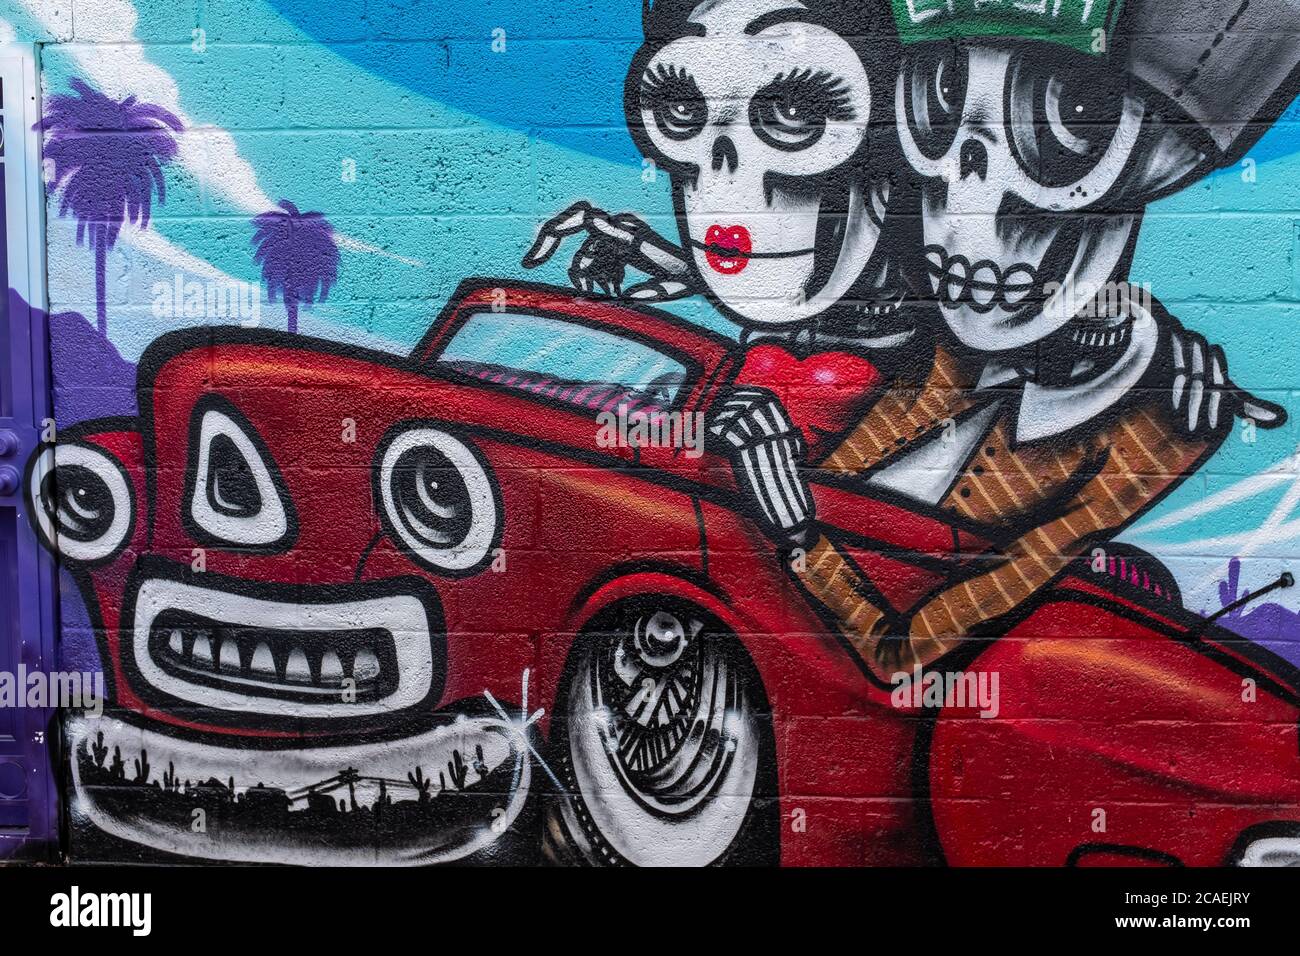 street art by Lalo Cota in Albuquerque, New Mexico Stock Photo